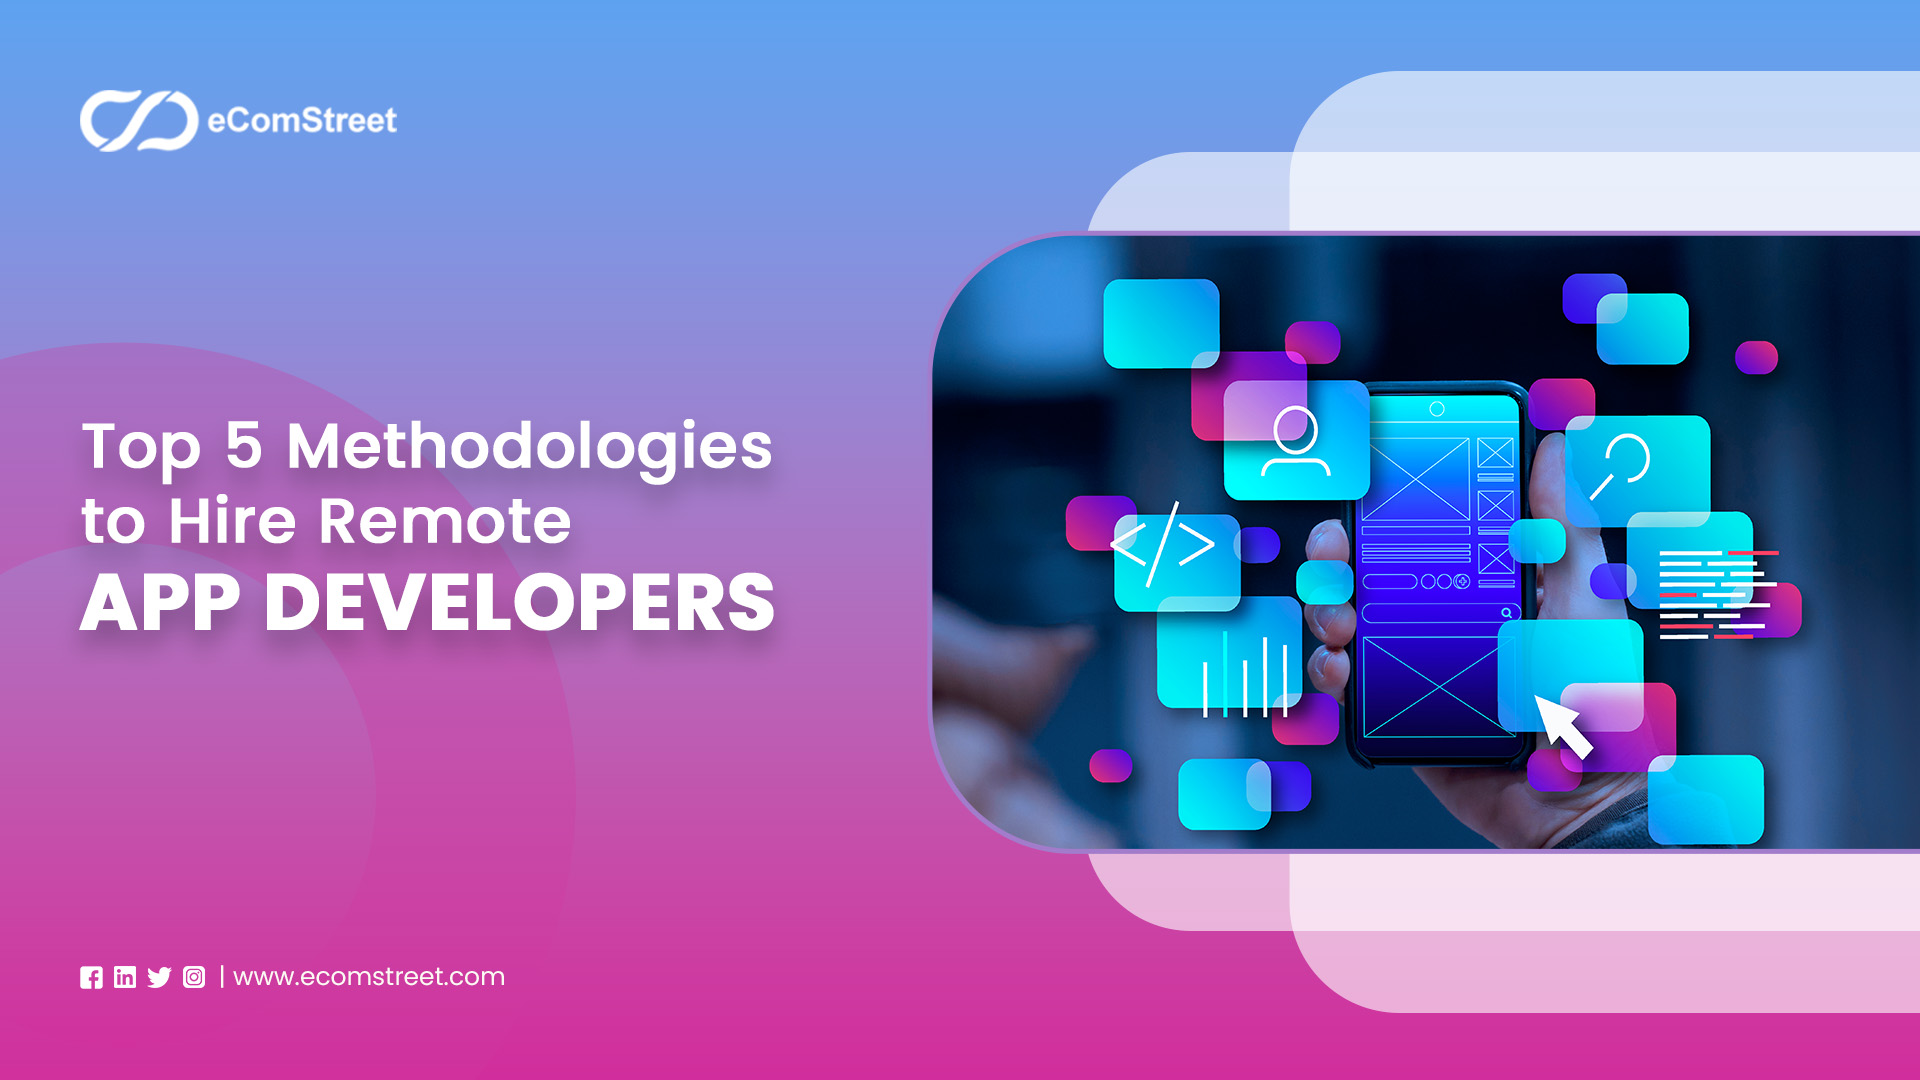 Top 5 Methodologies to Hire Remote App Developers